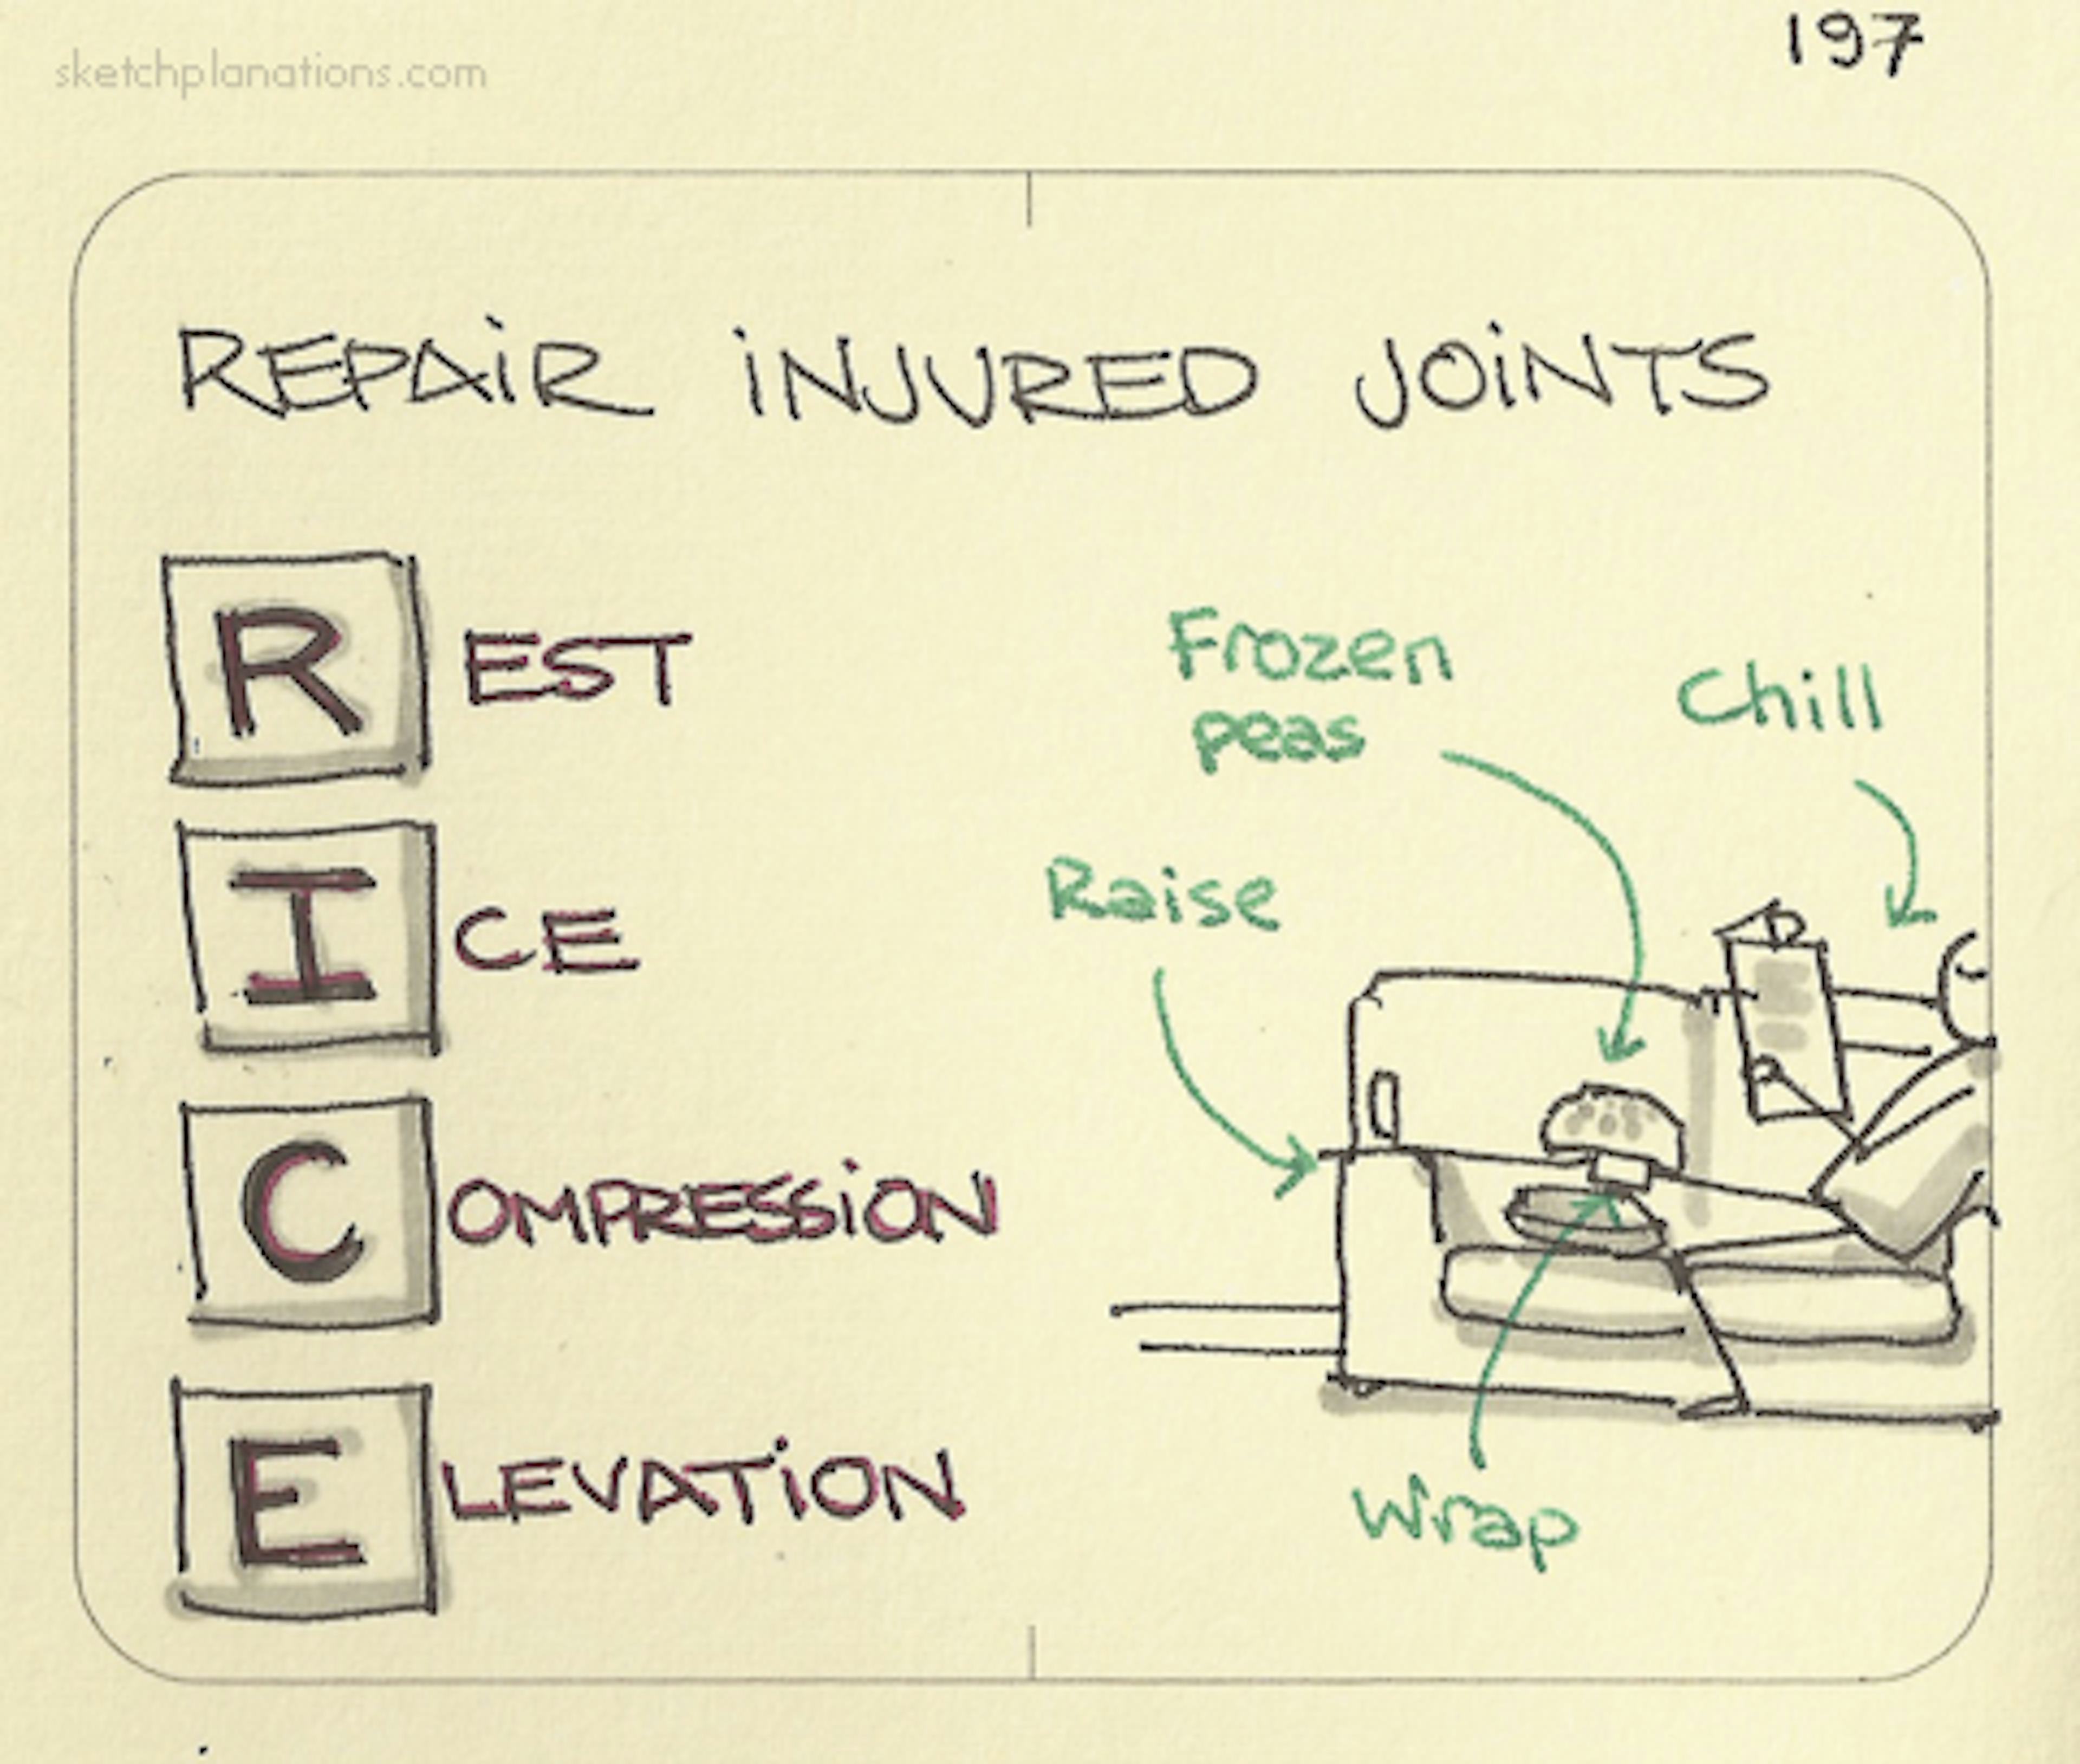 Repair injured joints - Sketchplanations